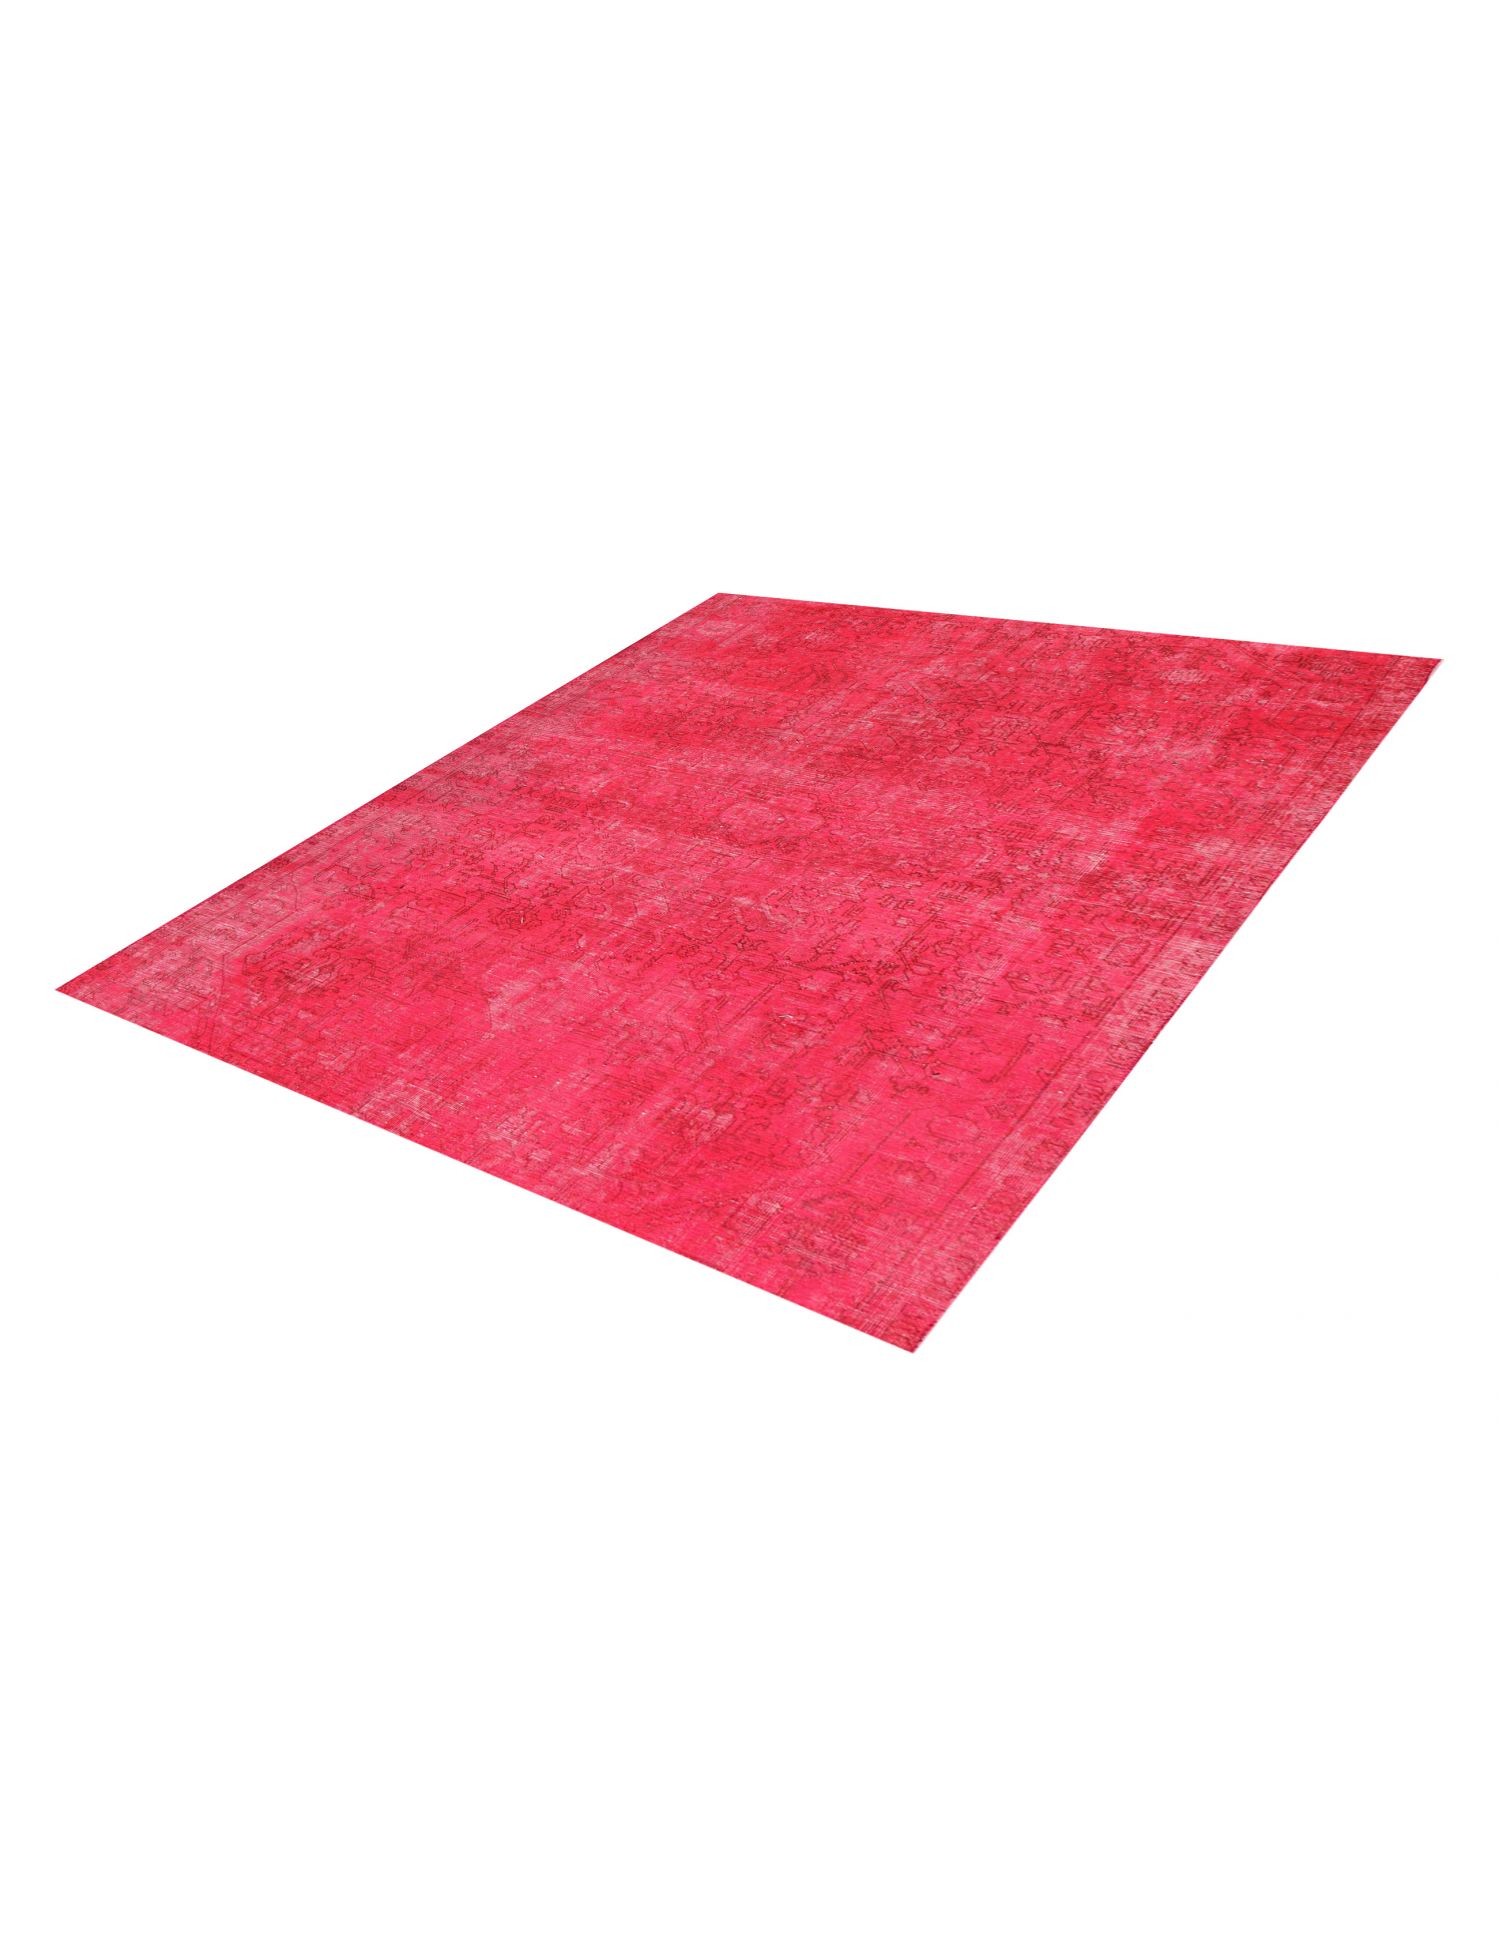 Quadrat  Vintage Teppich  rot <br/>192 x 192 cm